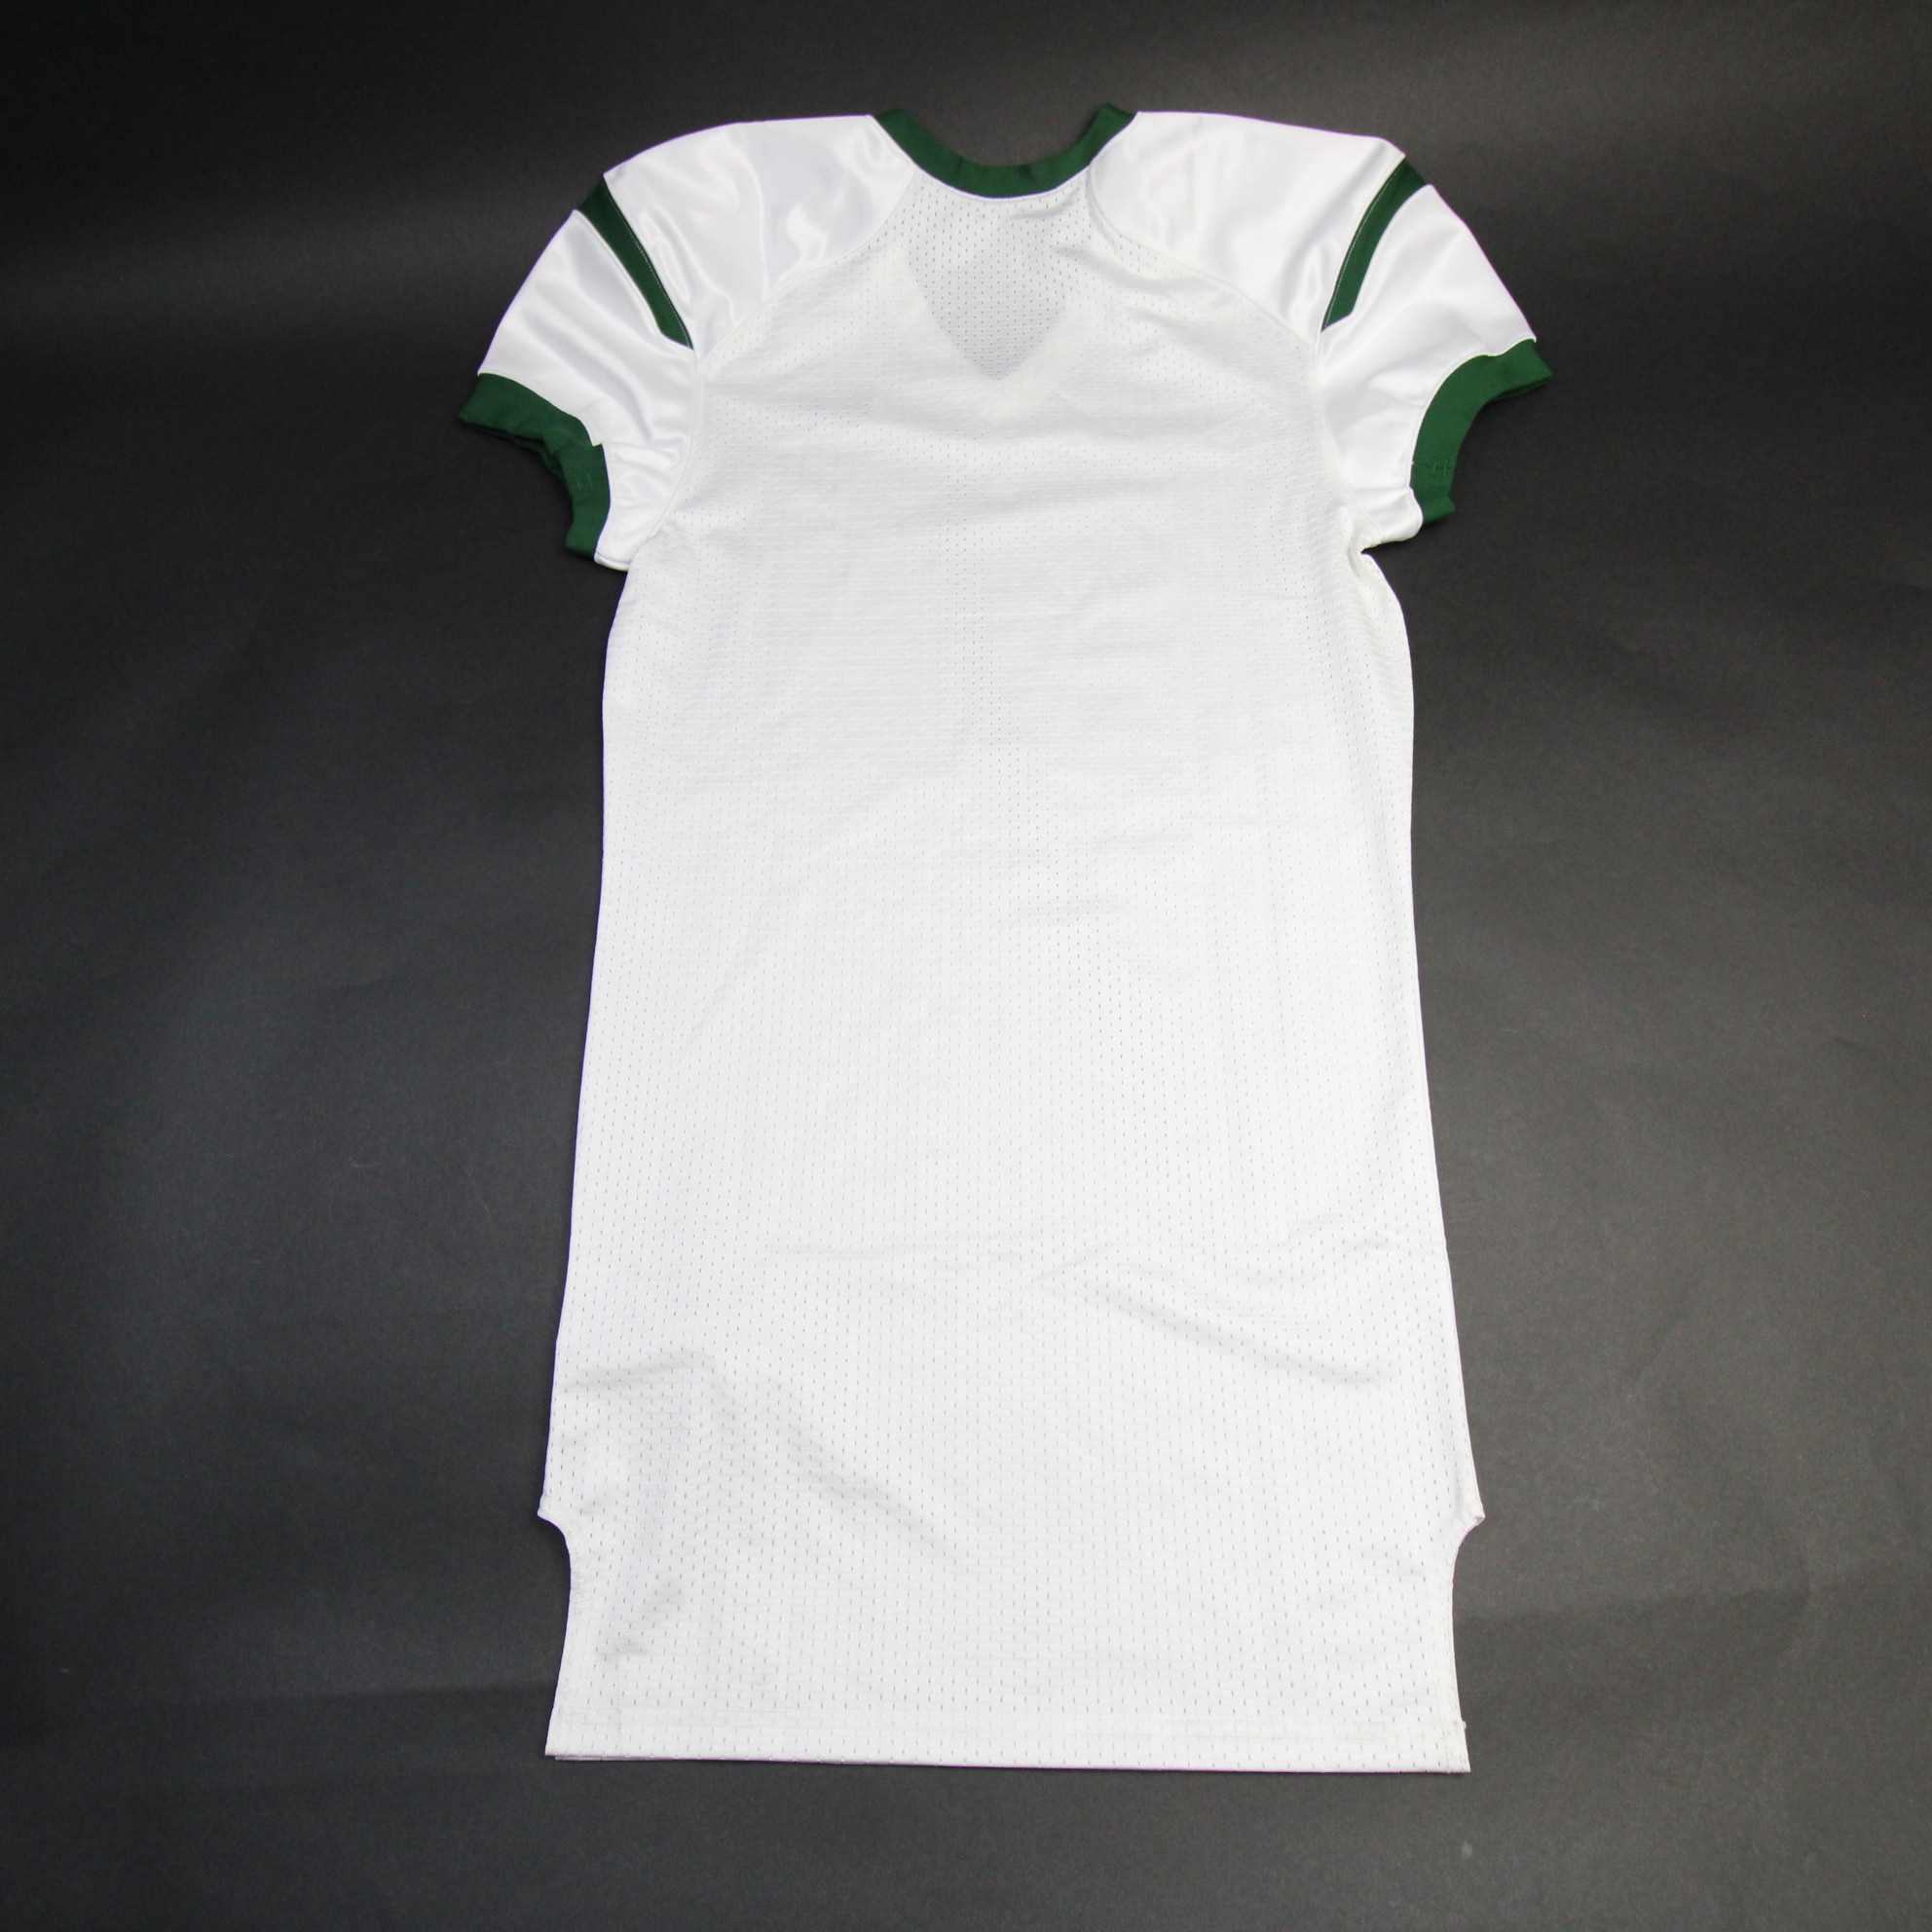 A4 Sportswear White Adult 3XL Football Drills Practice Jersey 